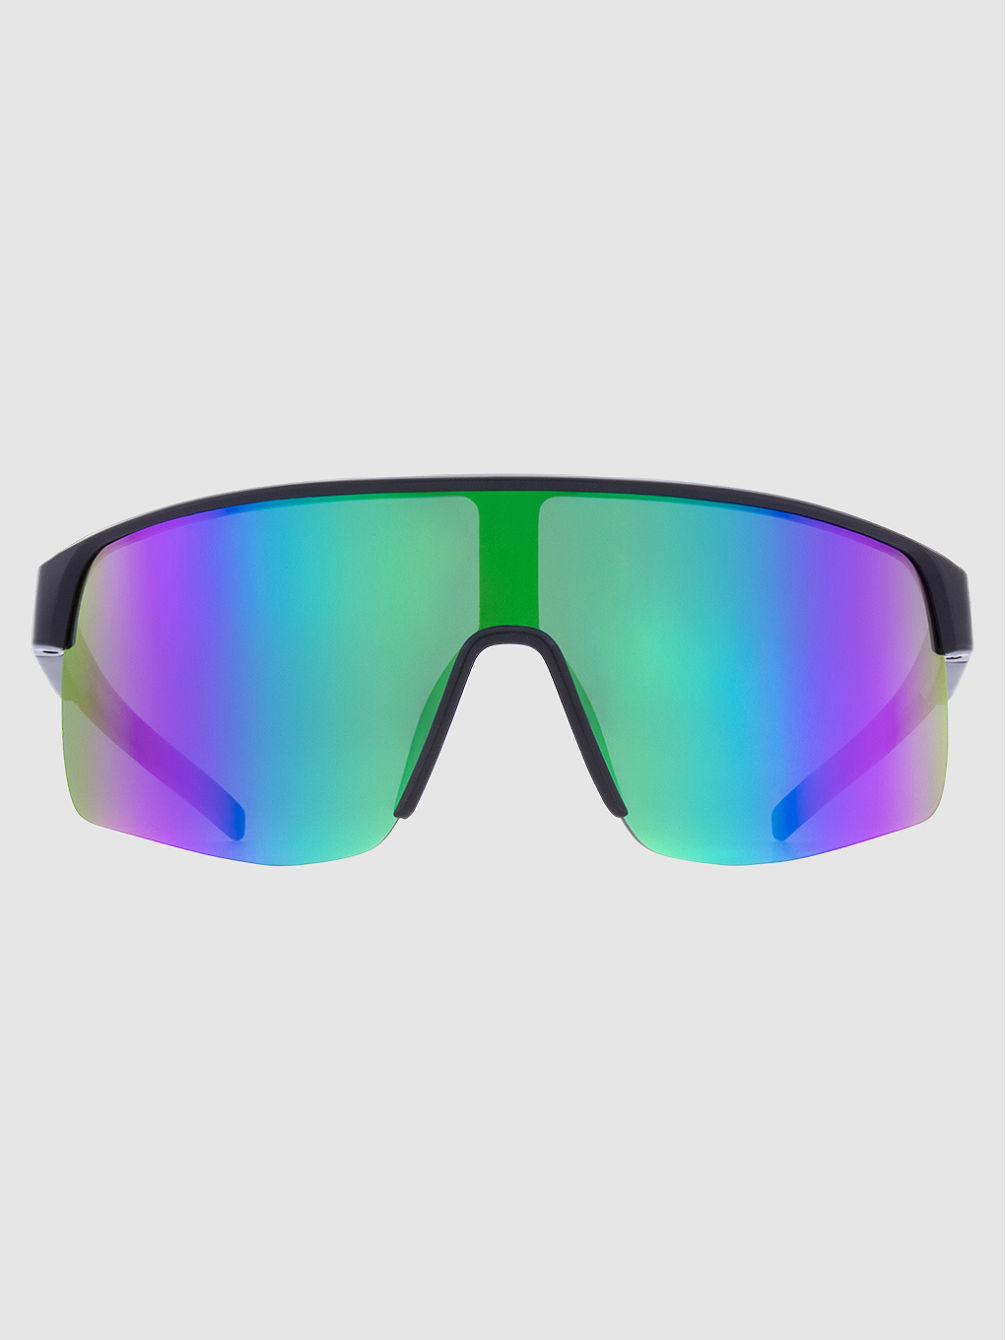 DAKOTA-008 Black/Green Sunglasses